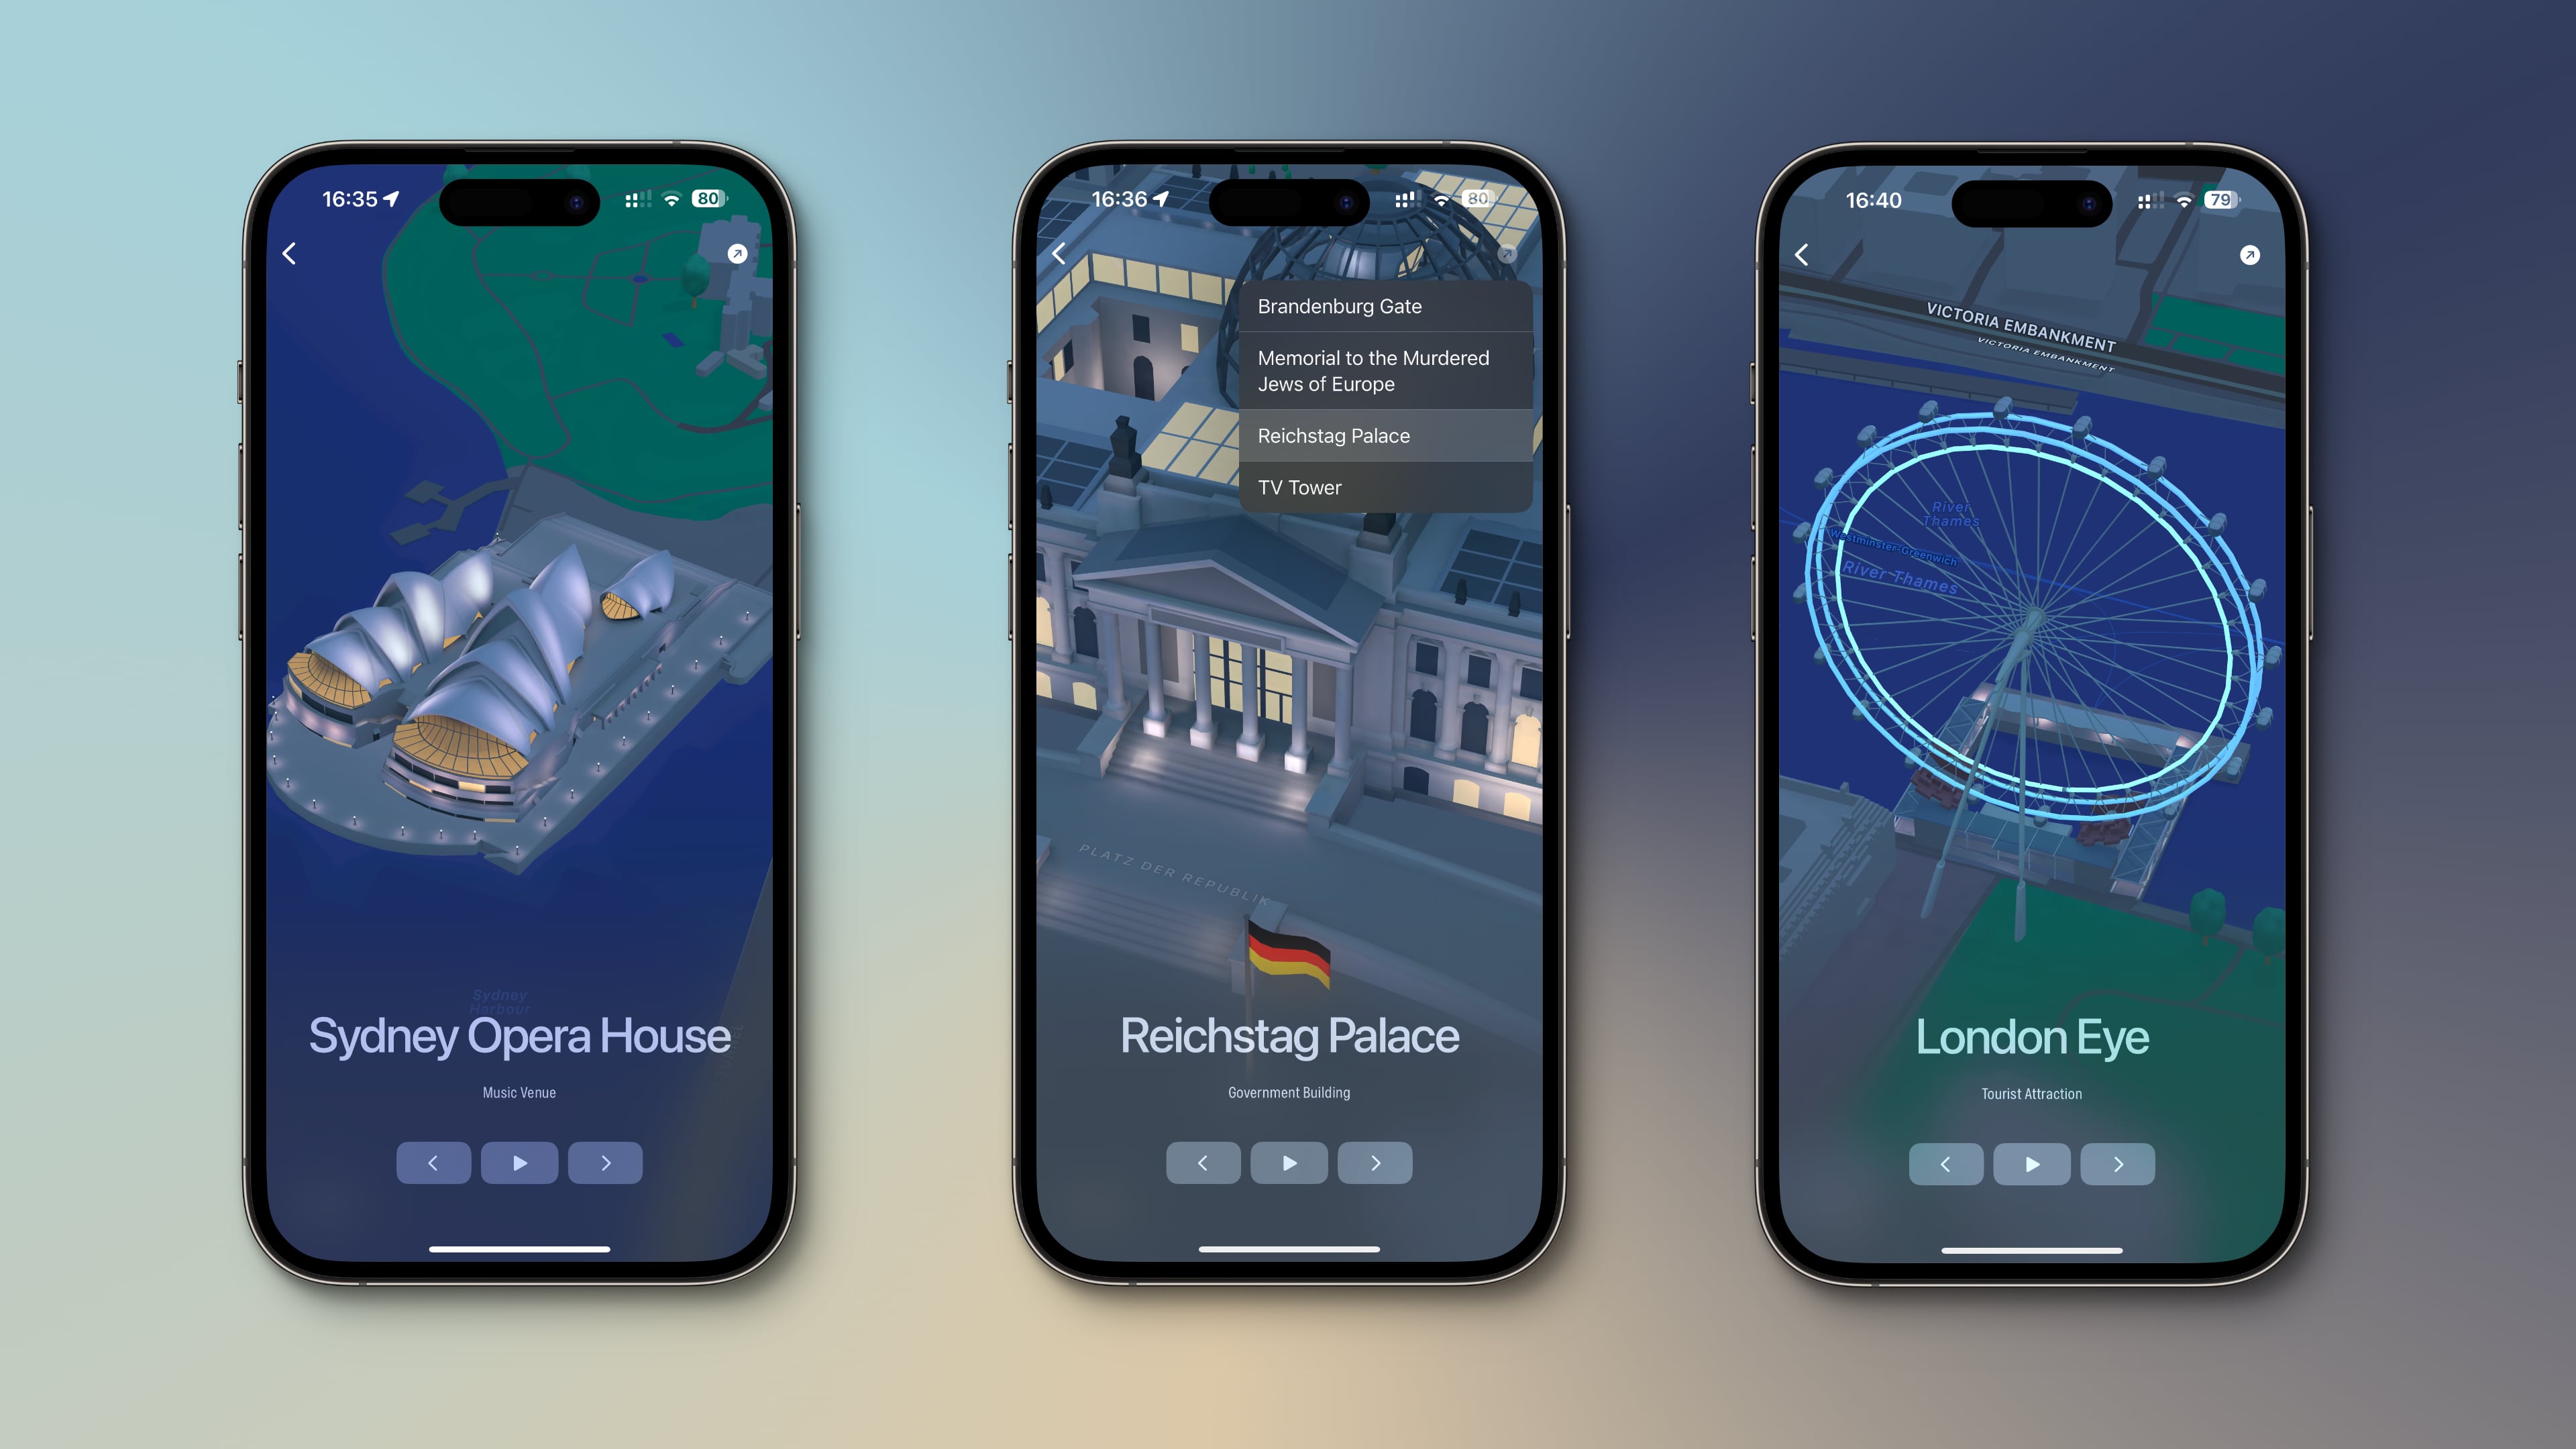 The Landmarks iPhone app showcasing Apple Maps 3D landmarks